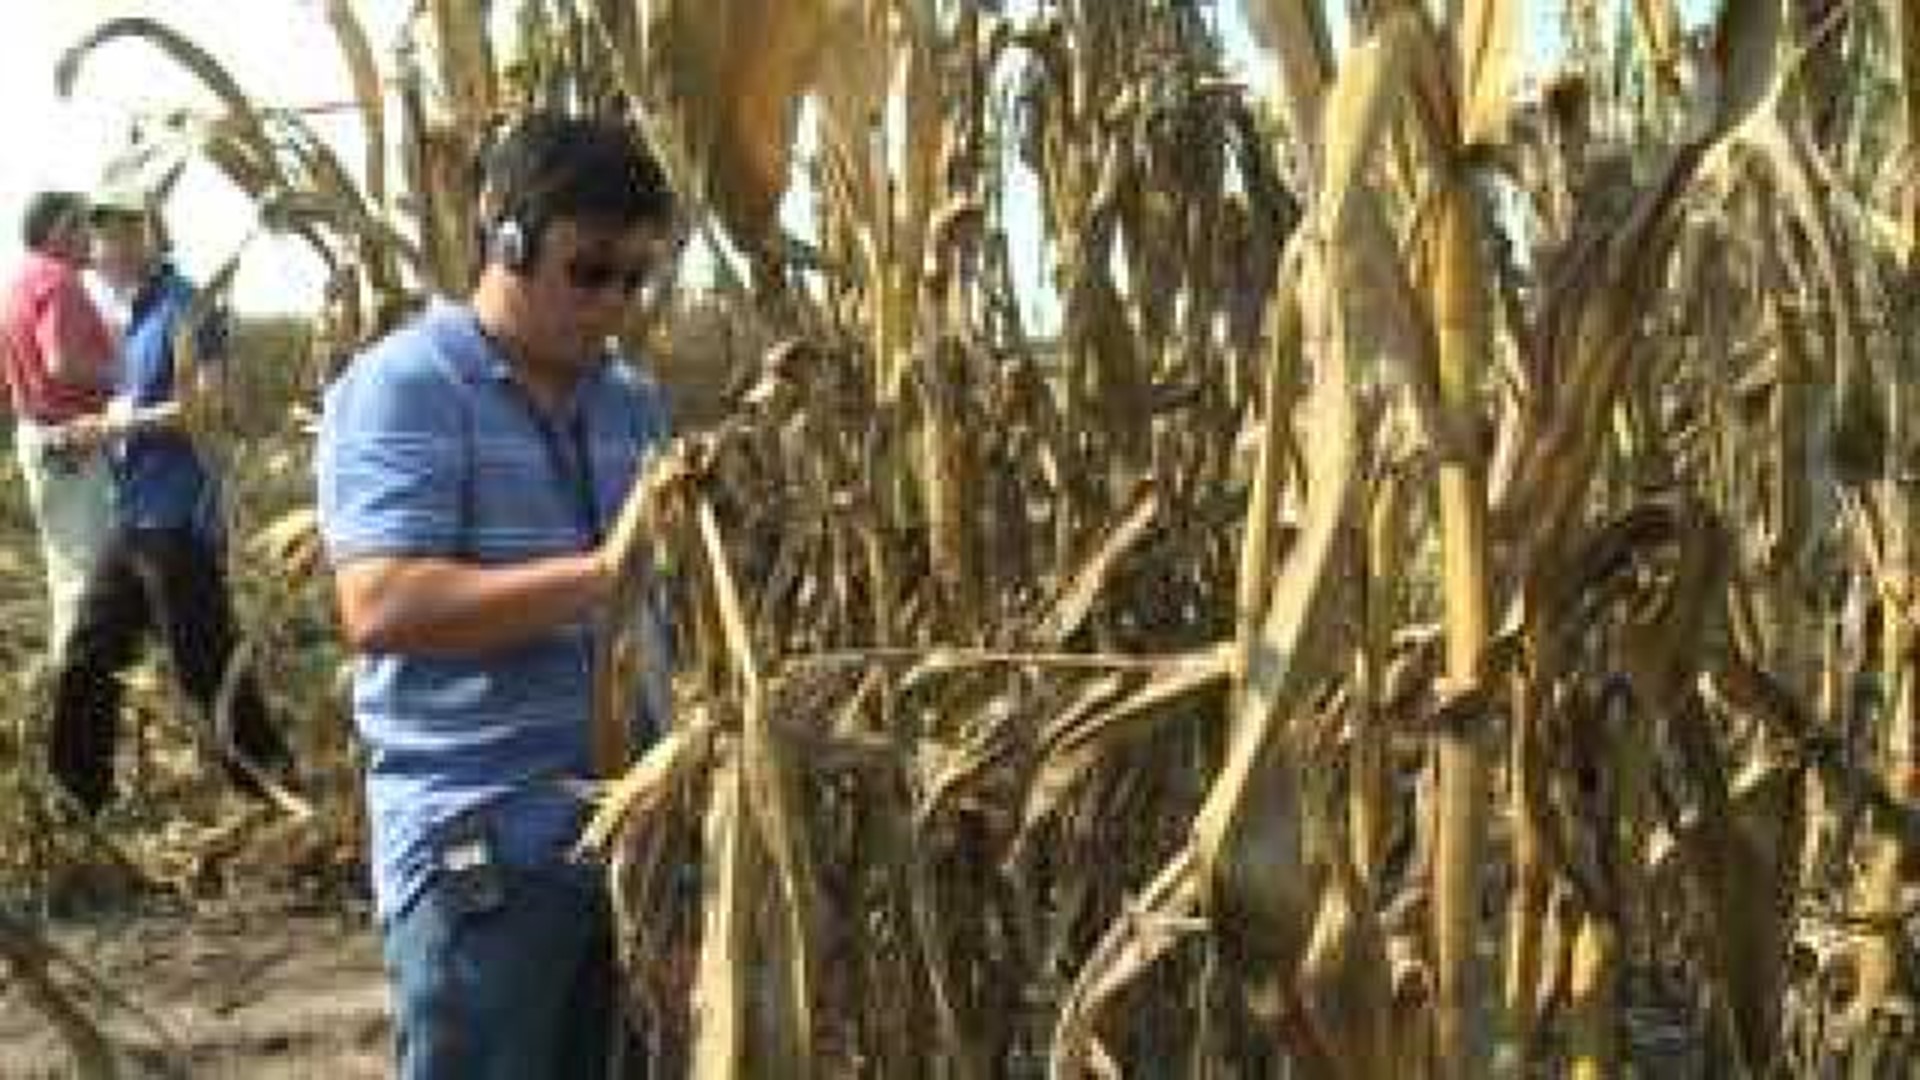 Brazillian farmers tour drought-stricken farm